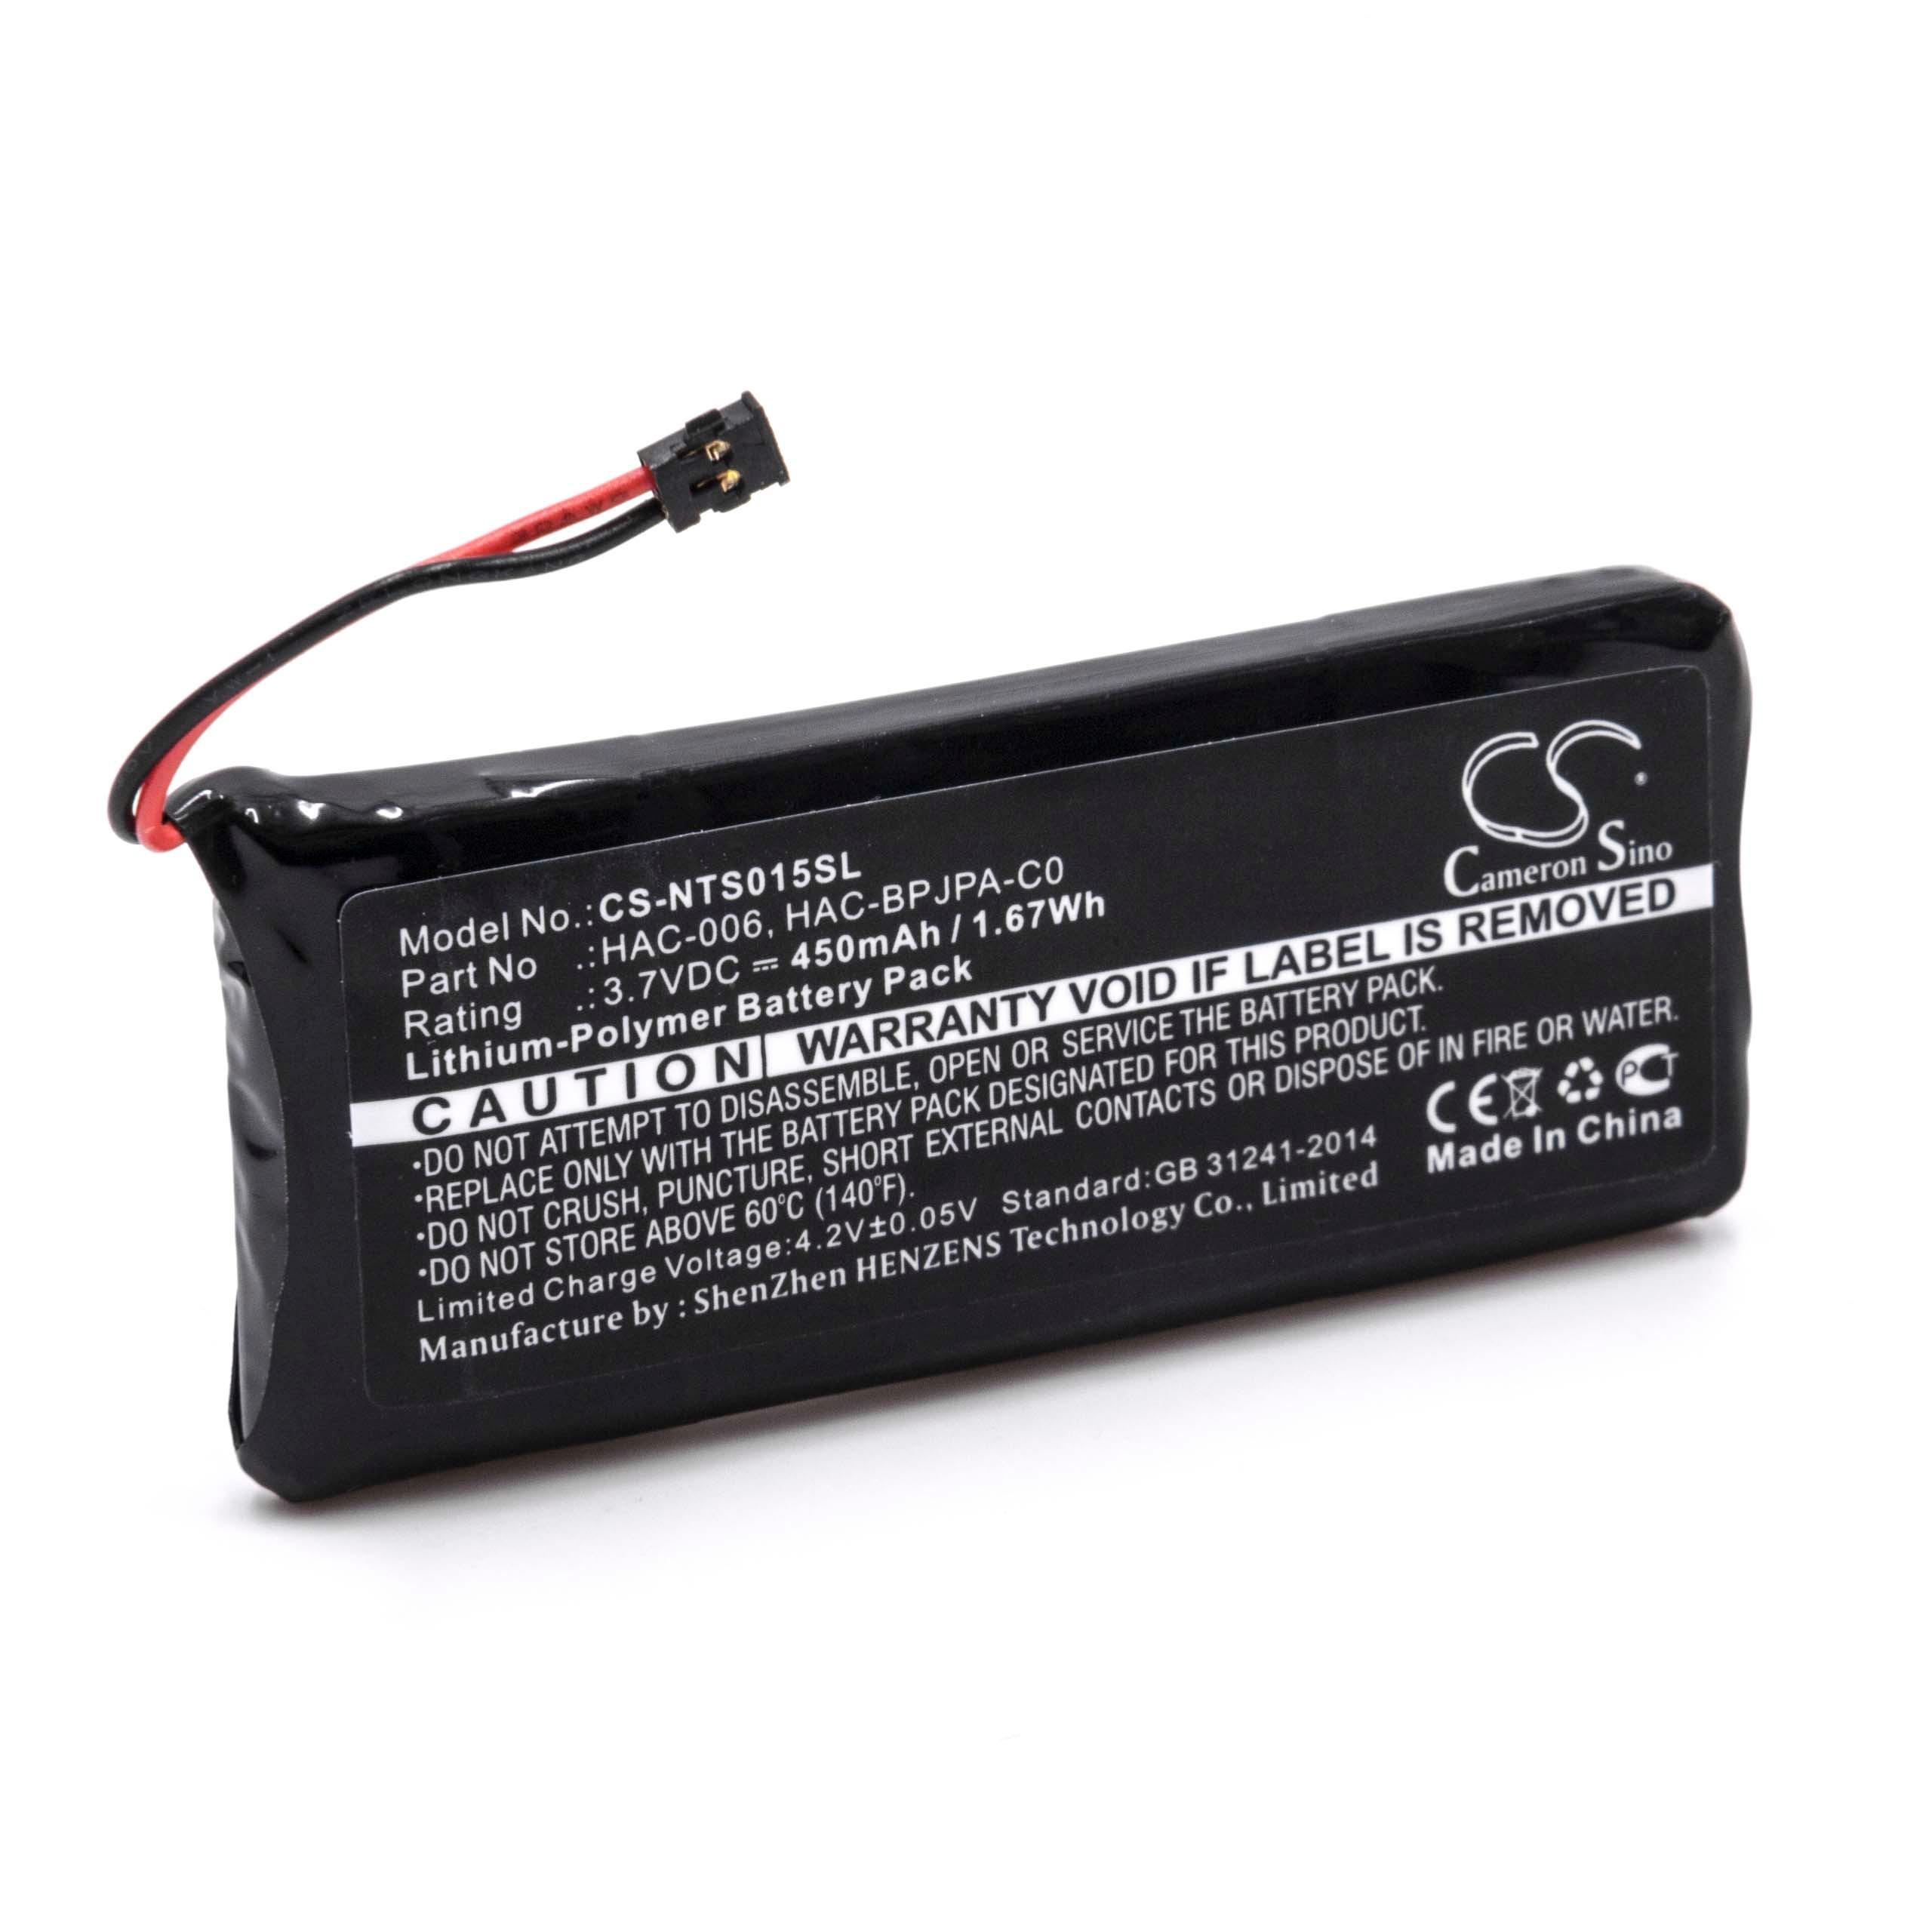 Akumulator do pada Nintendo zamiennik Nintendo HAC-BPJPA-C0, HAC-006 - 450 mAh, 3,7 V